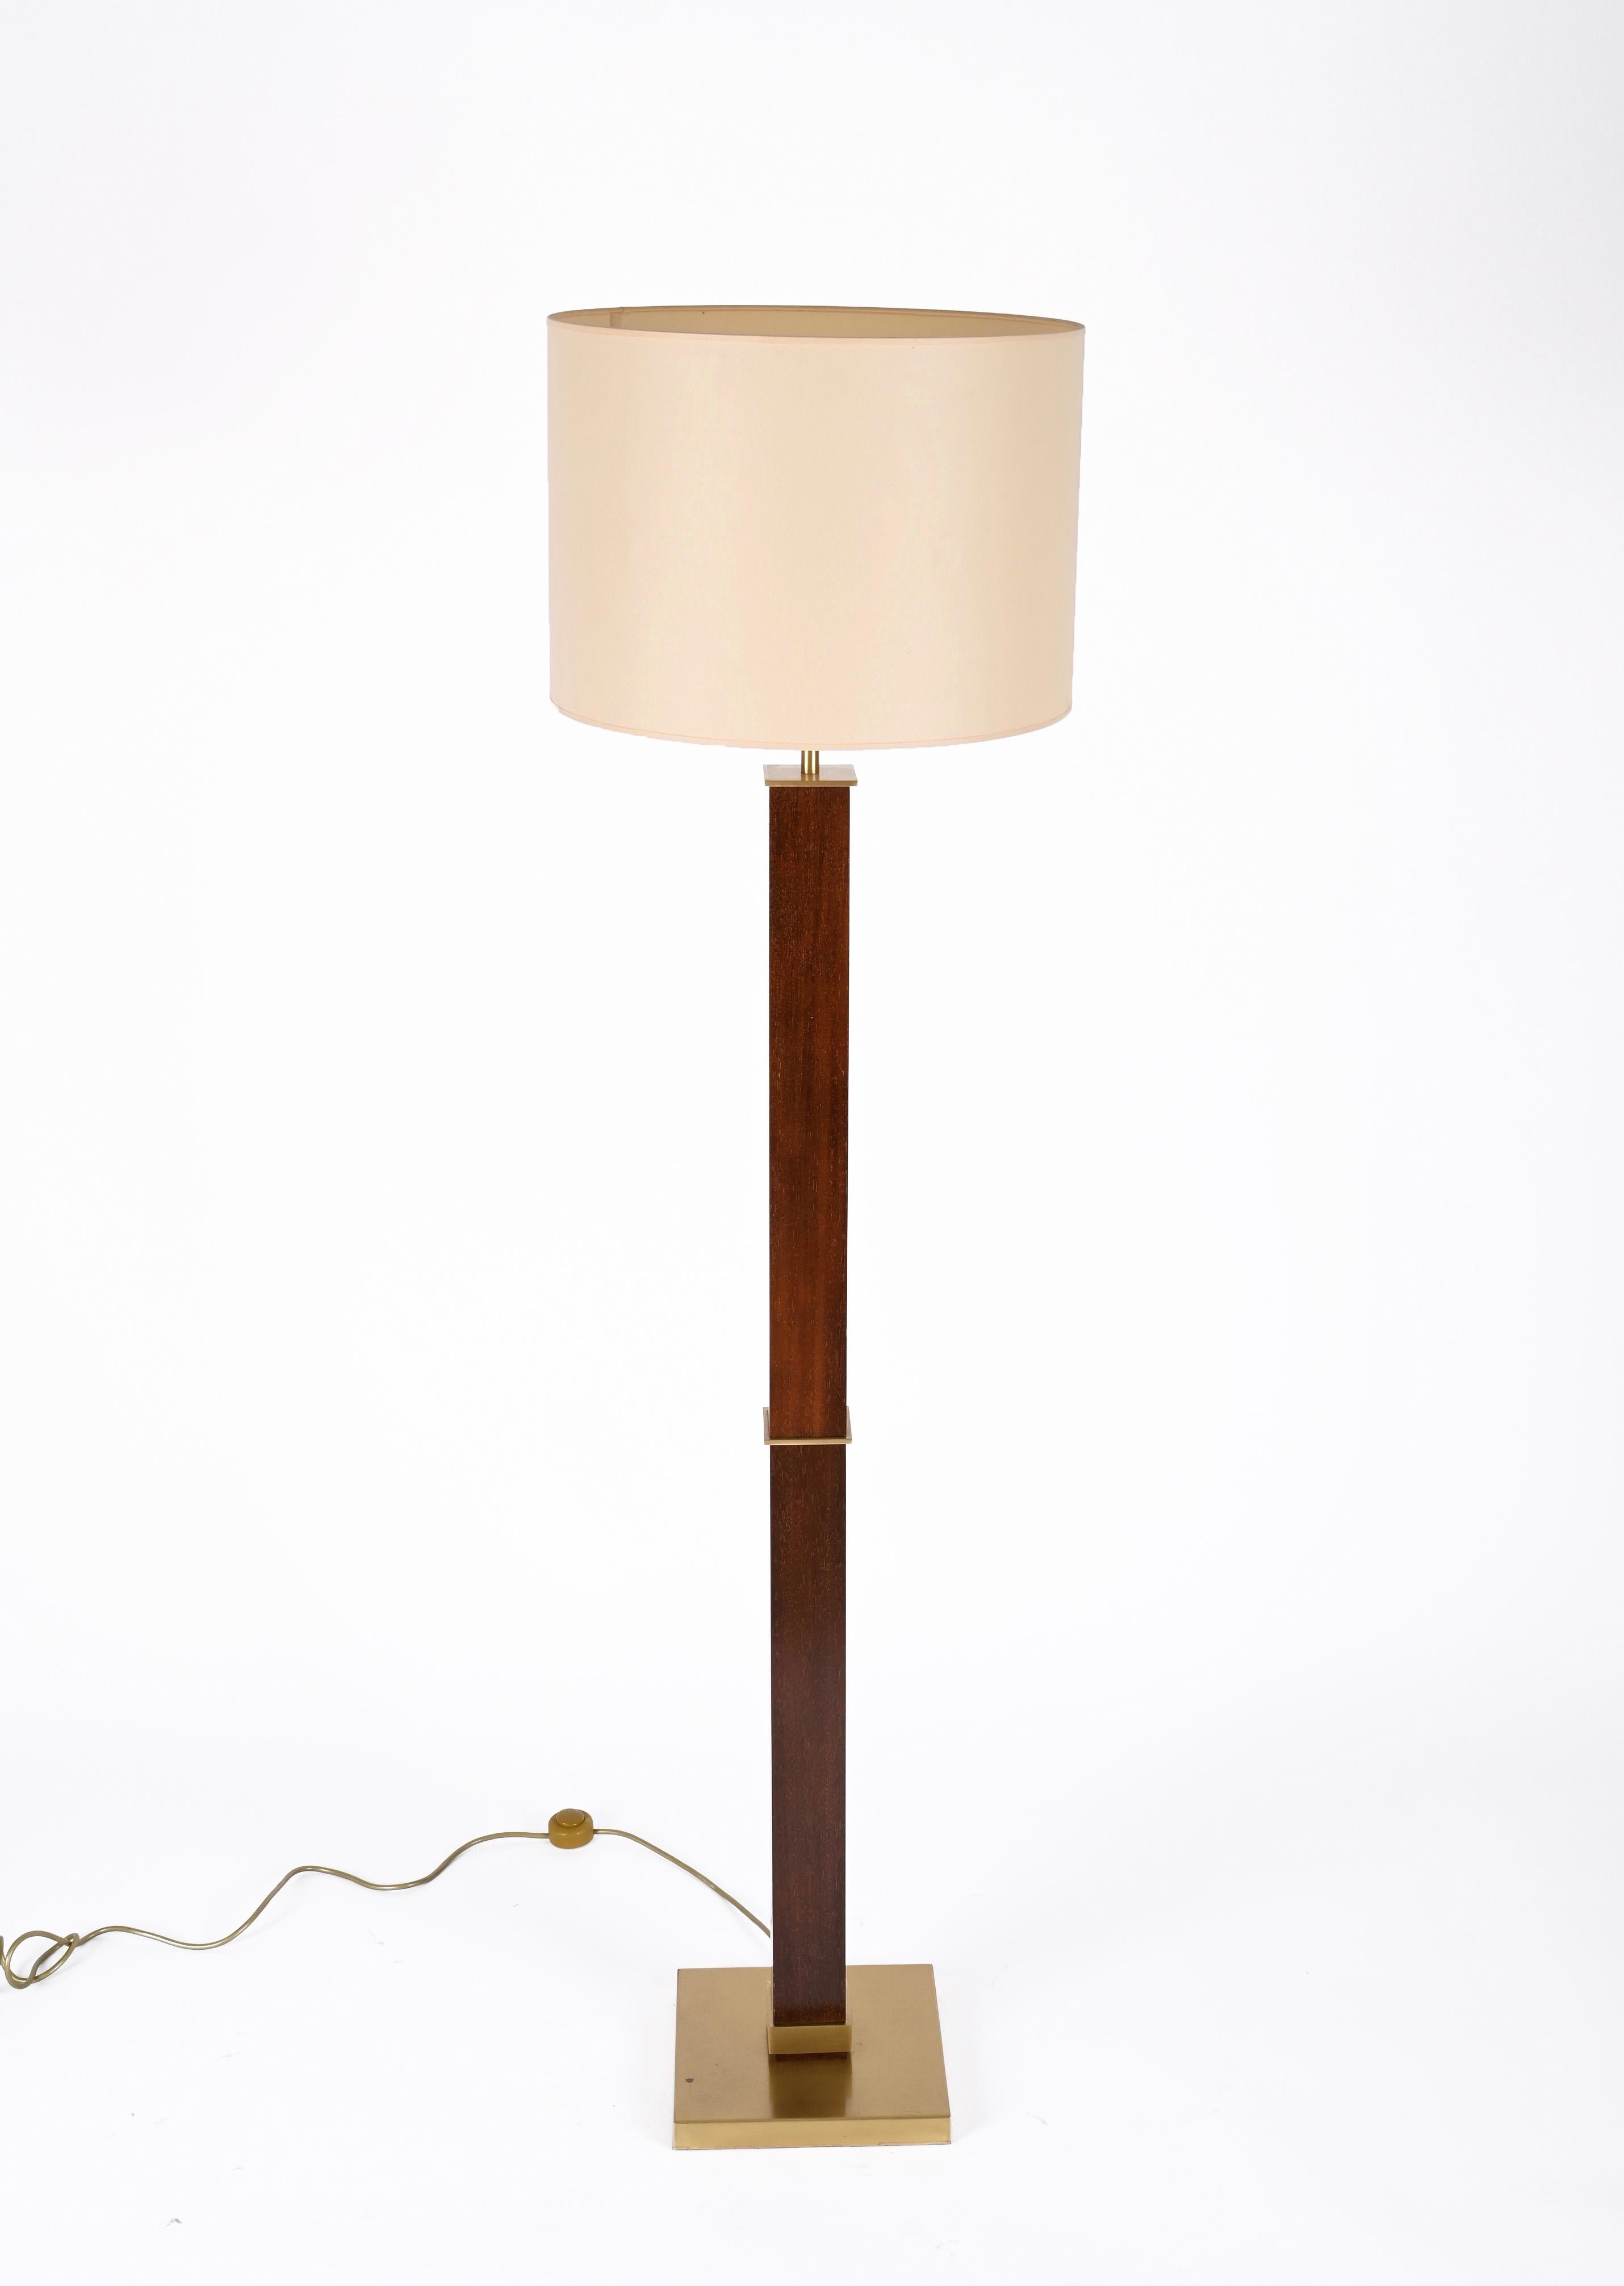 Zonca Voghera Minimal Mid-Century Italian Wood and Steel Floor Lamp, 1980s For Sale 2